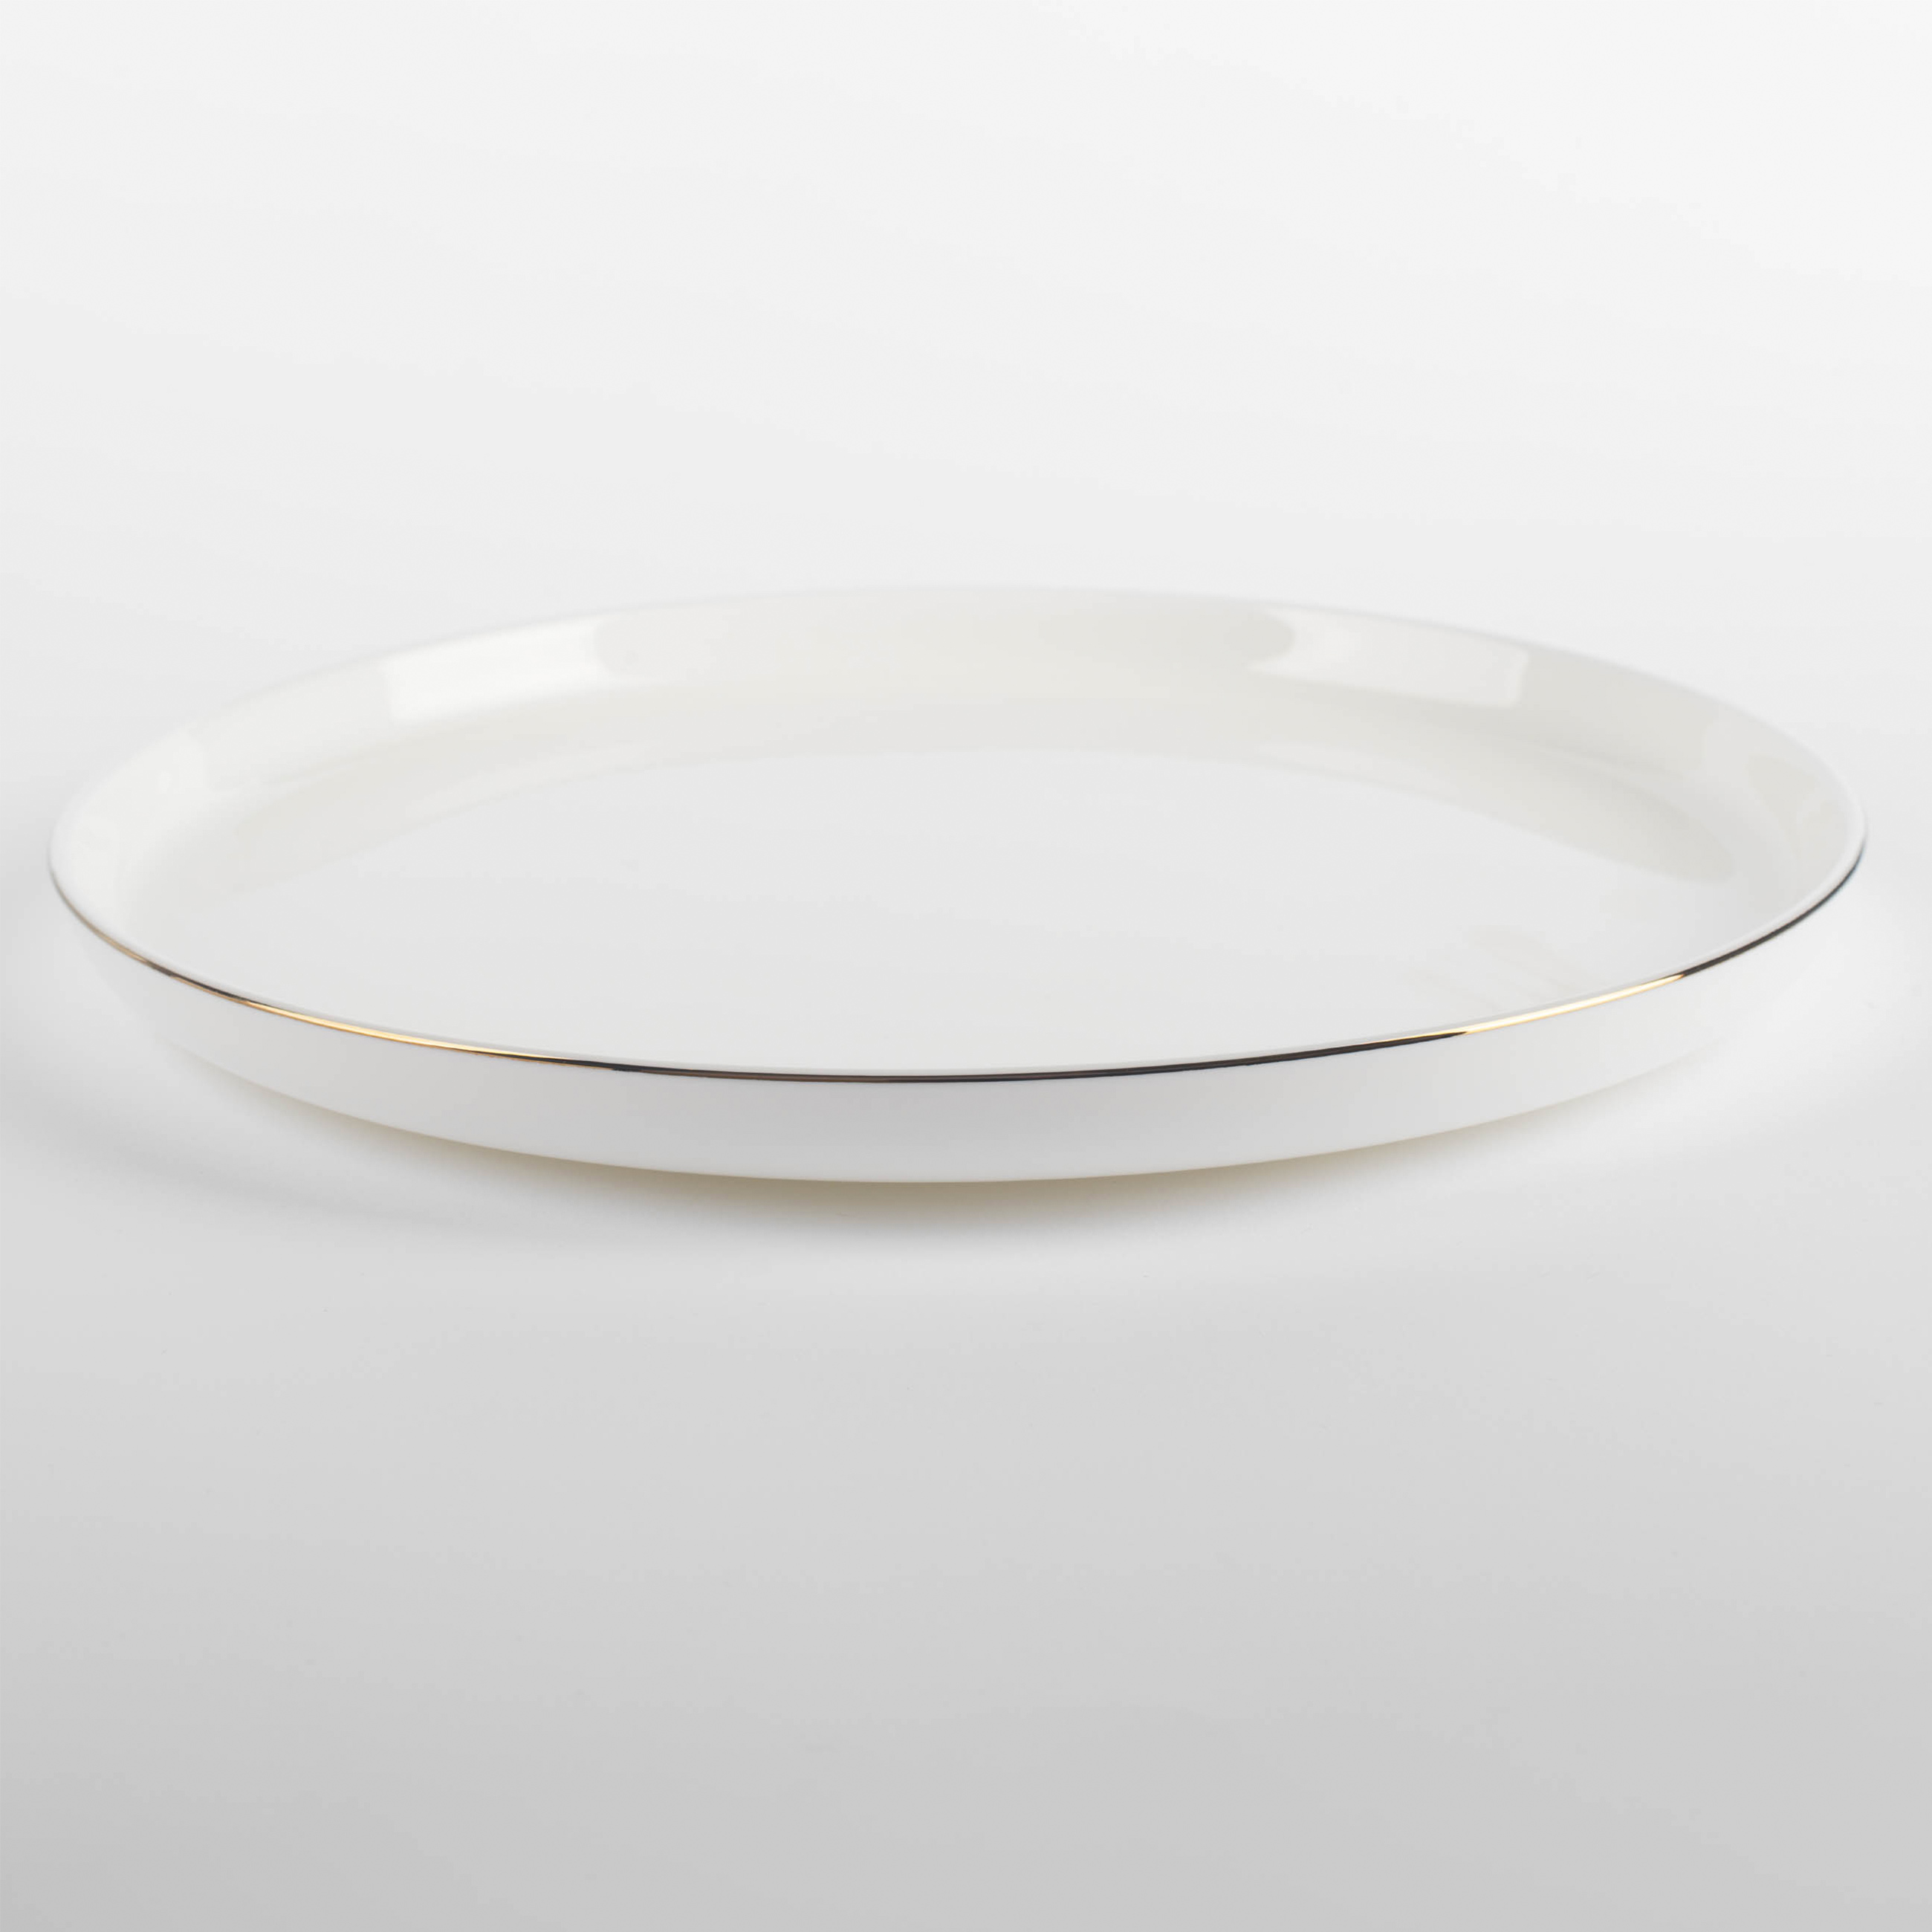 Dining plate, 26 cm, porcelain F, white, Ideal gold изображение № 3